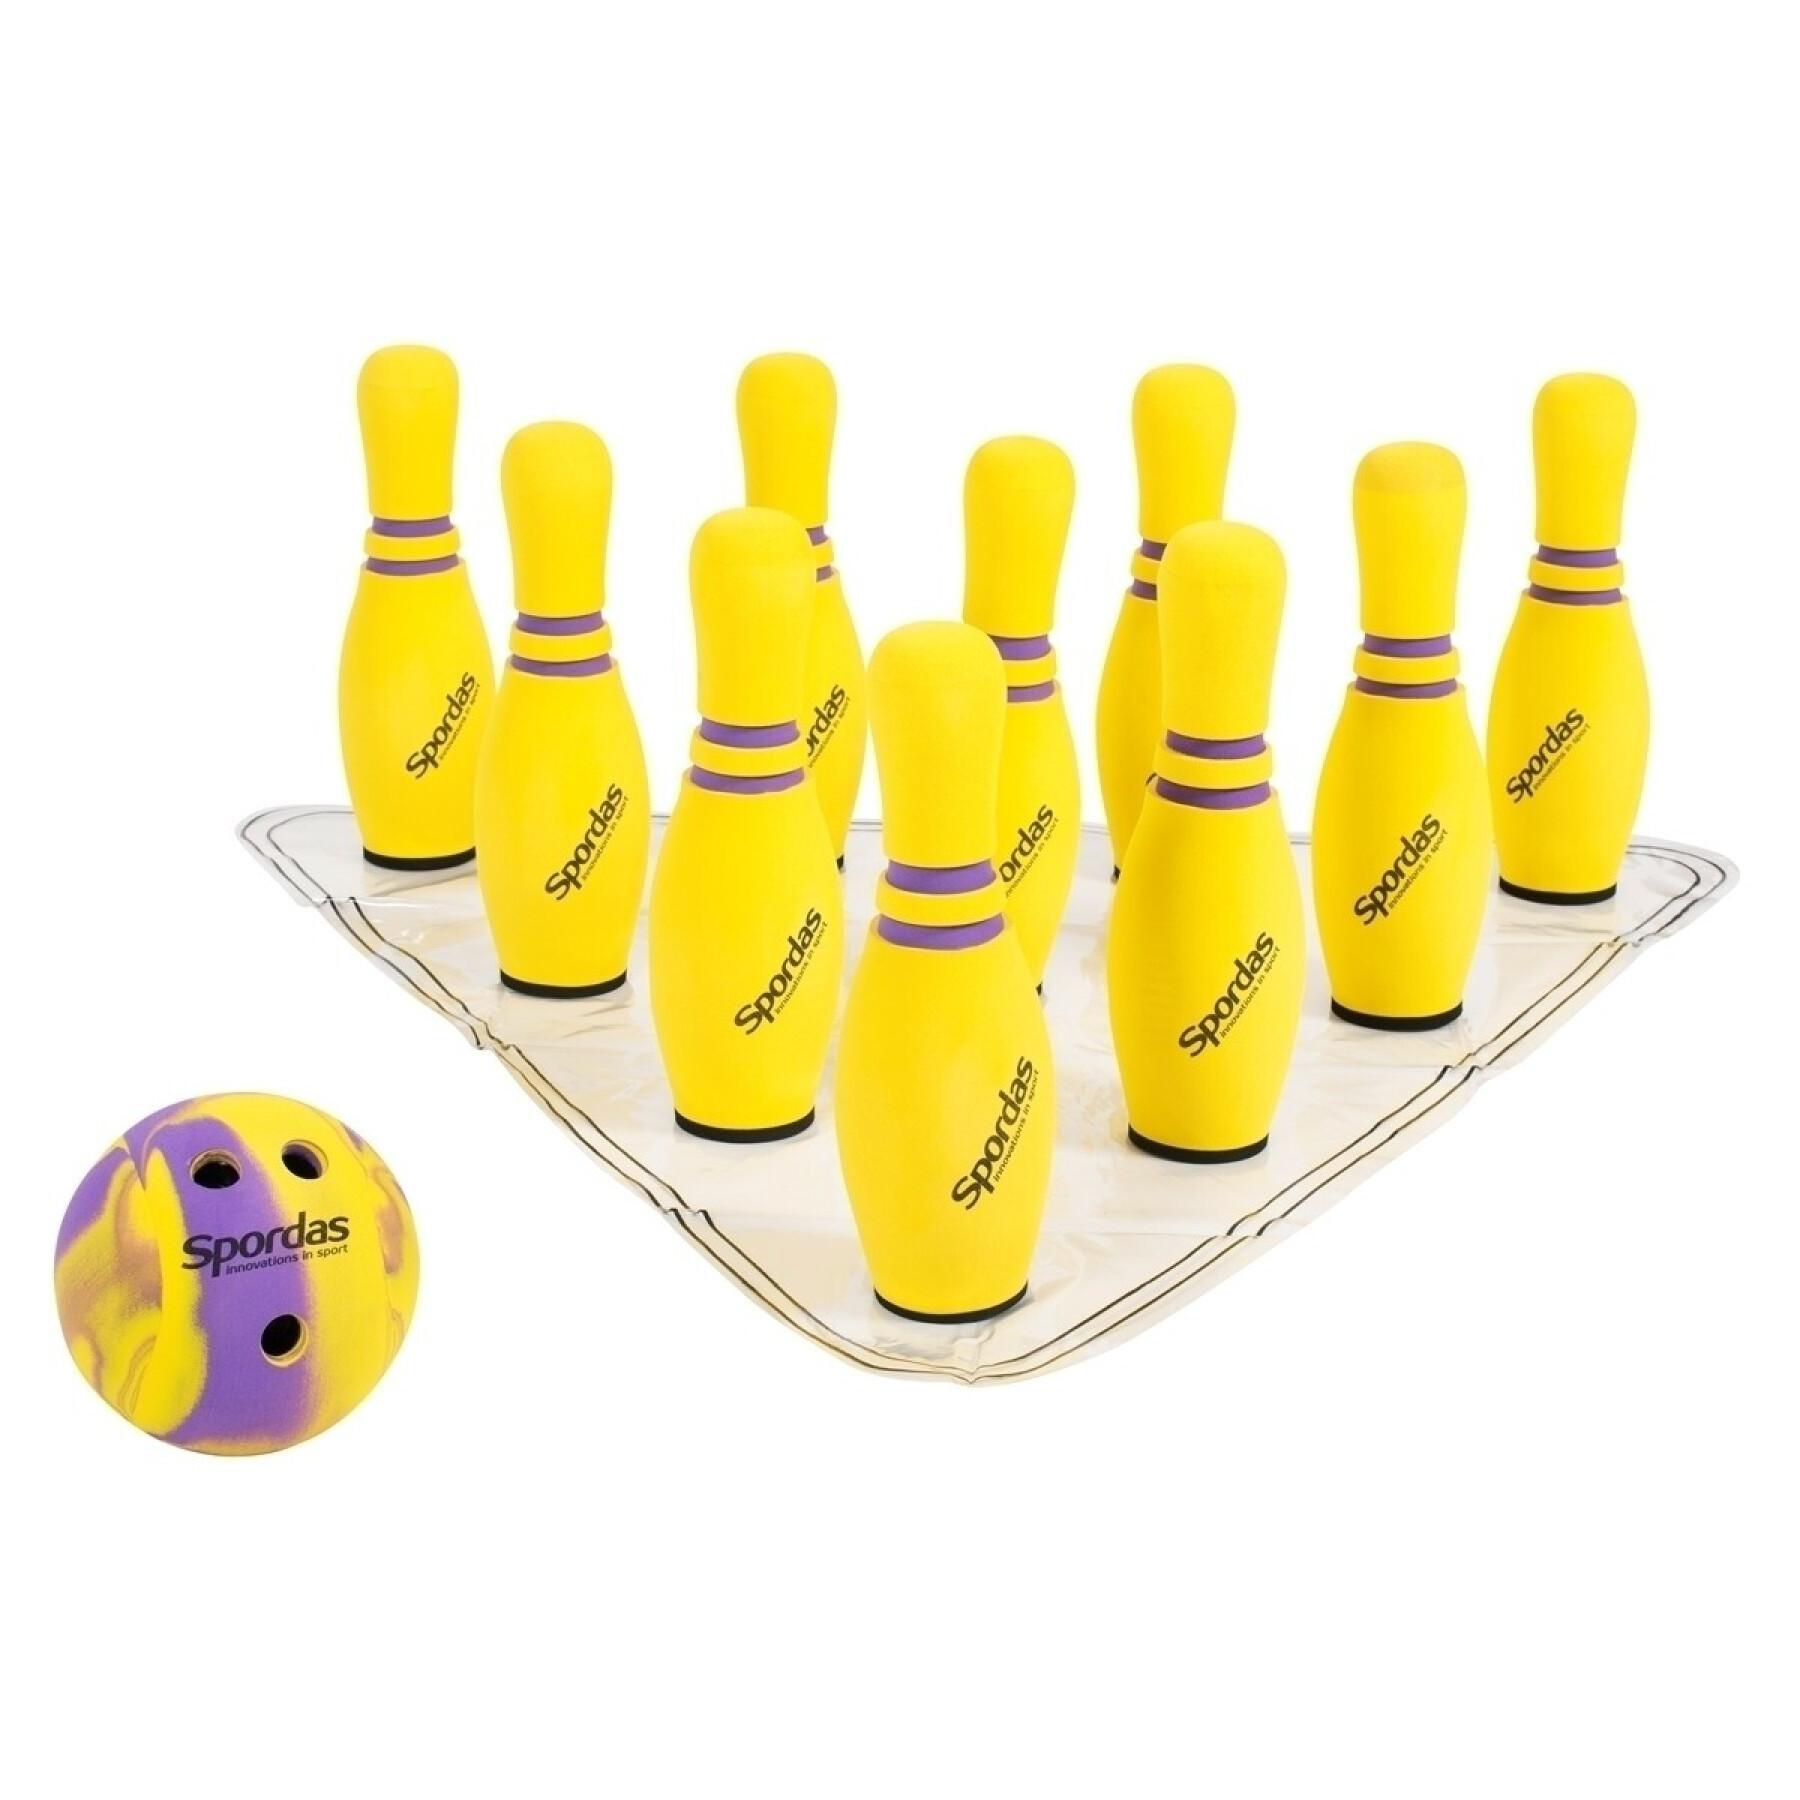 Schaumstoff-Bowlingspiel Spordas Super